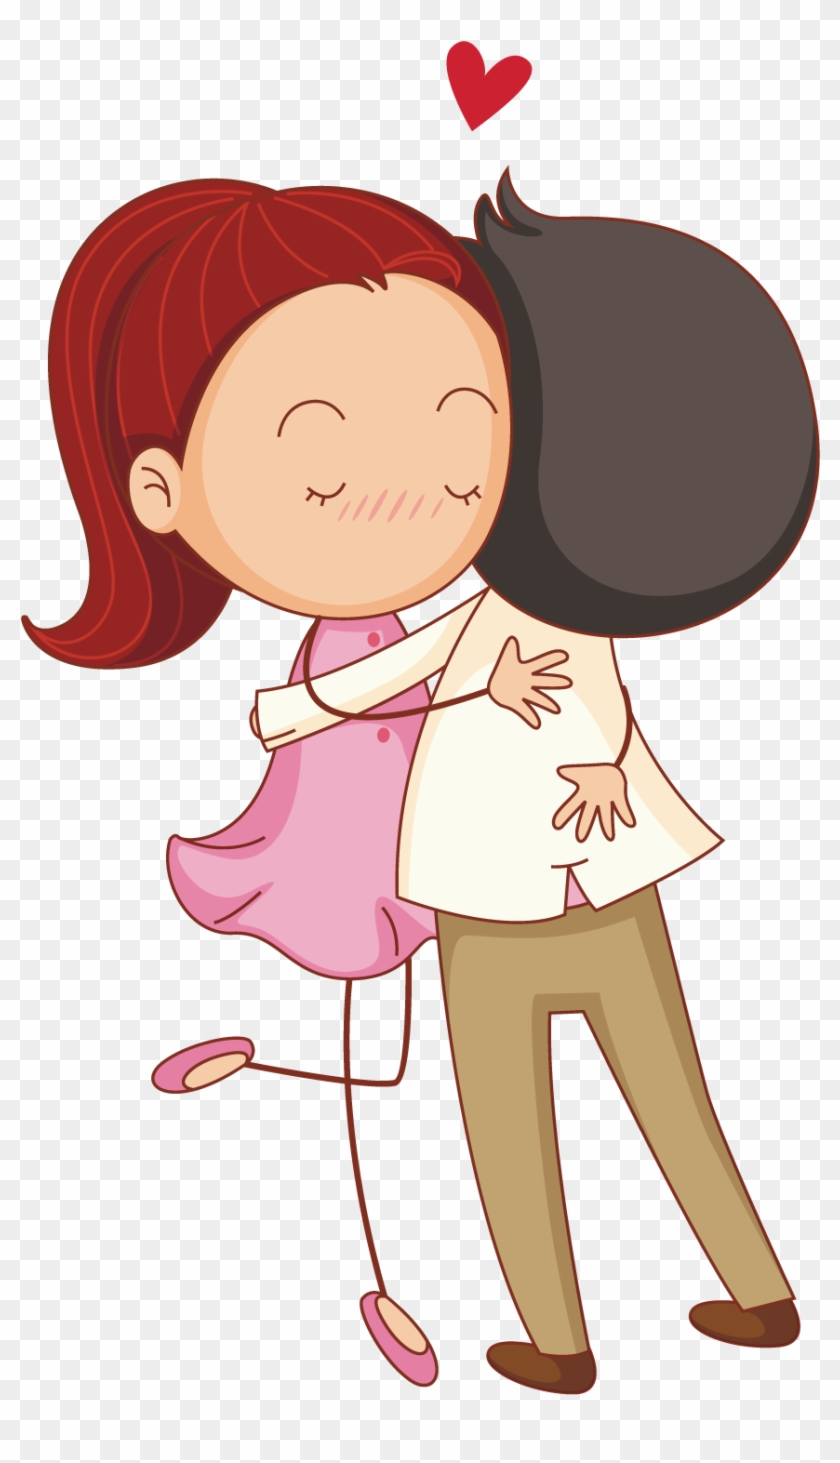 Hug Cartoon Drawing Illustration Cartoon Boy And Girl Hugging Free Transparent Png Clipart Images Download